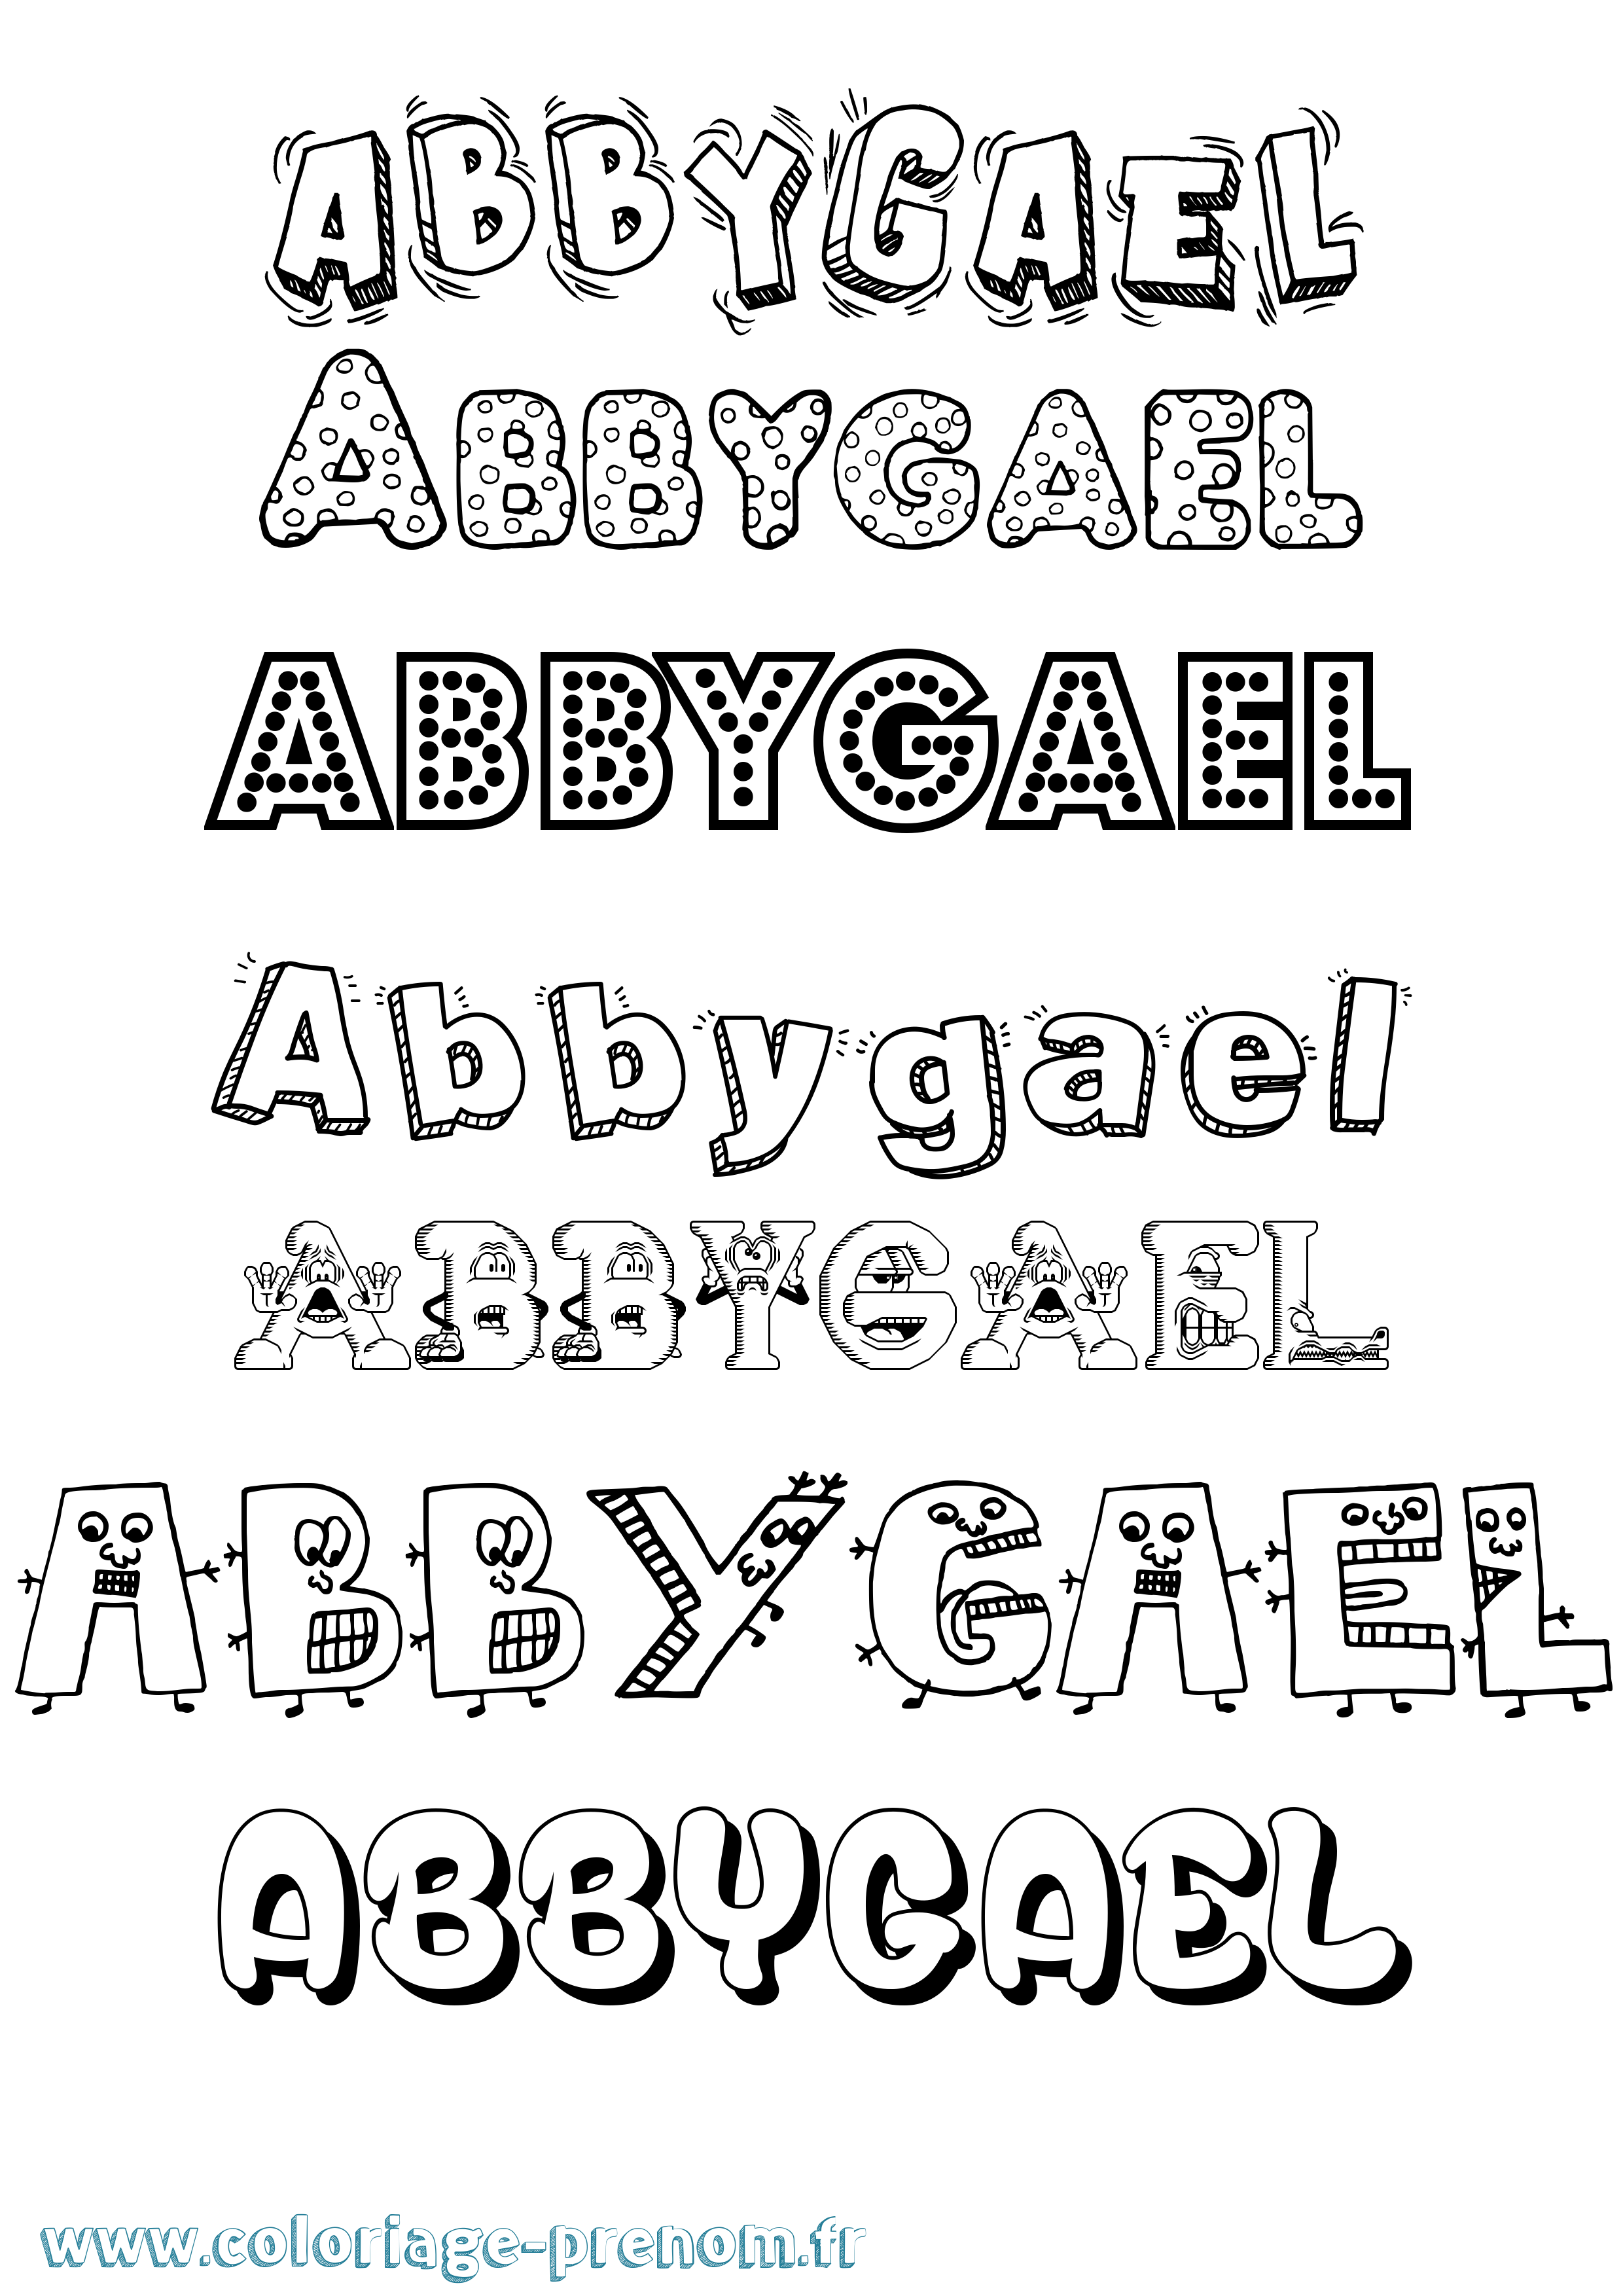 Coloriage prénom Abbygael